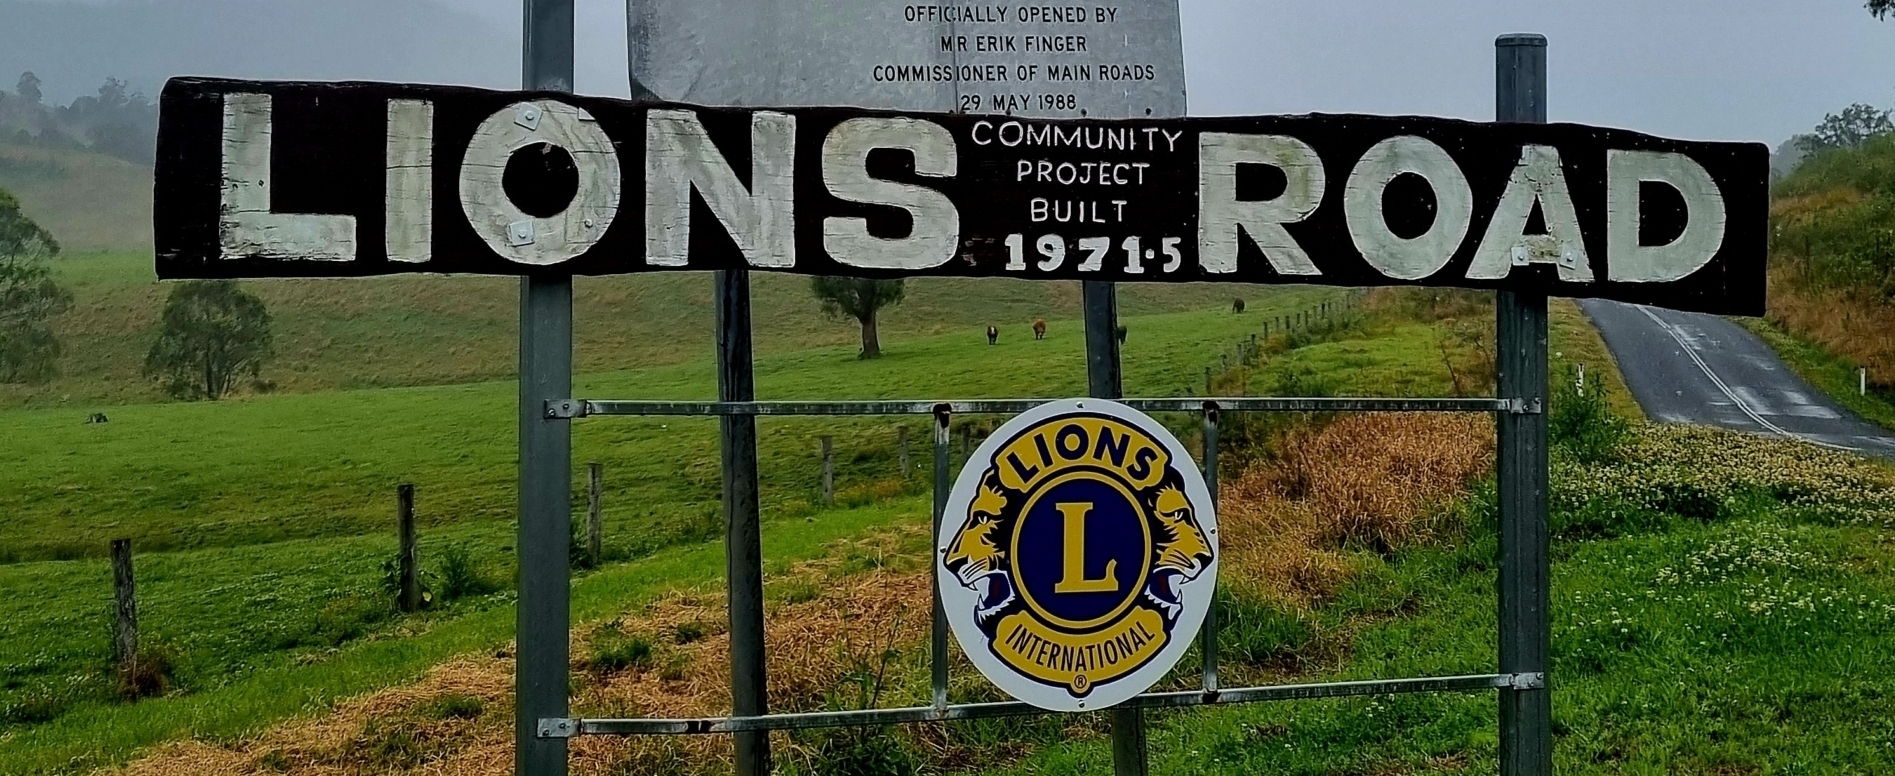 A trip down Lions Road Lions Clubs Australia